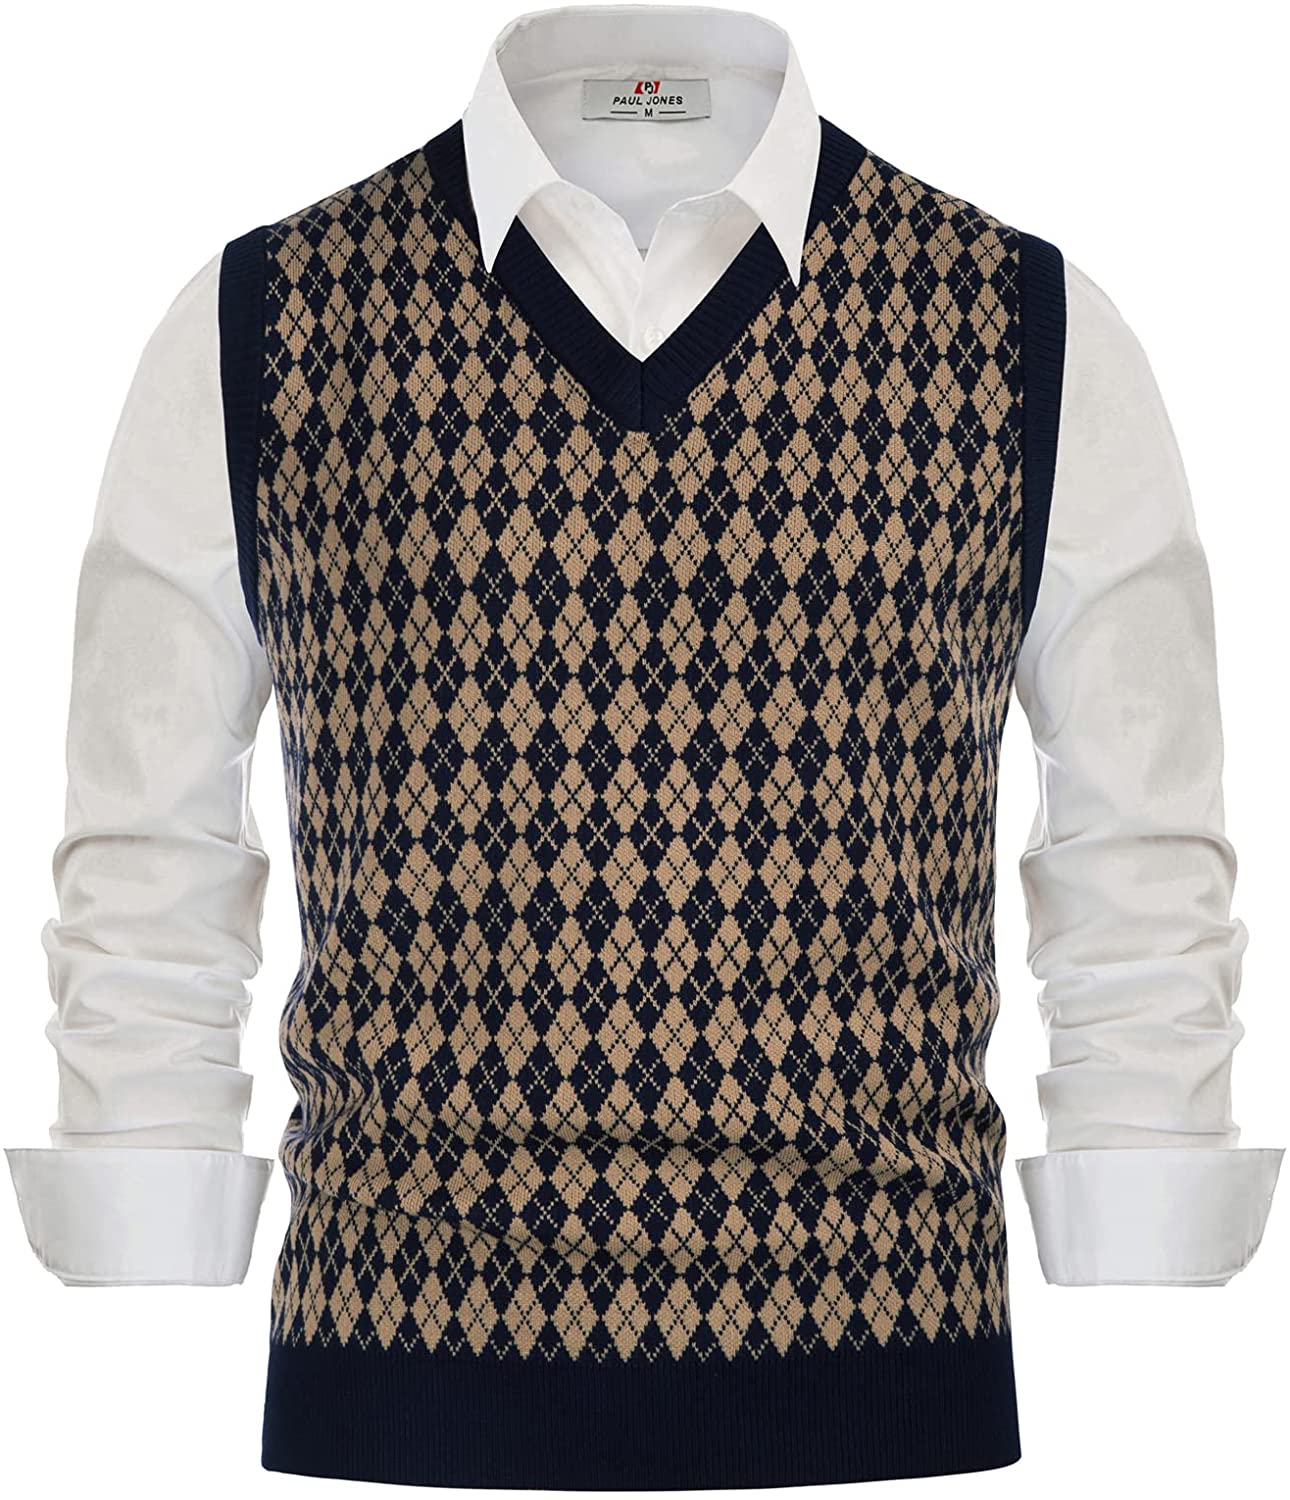 PJ PAUL JONES Mens Casual Argyle Sweater Vest V-Neck Sleeveless Pullover Knitwear Vests 